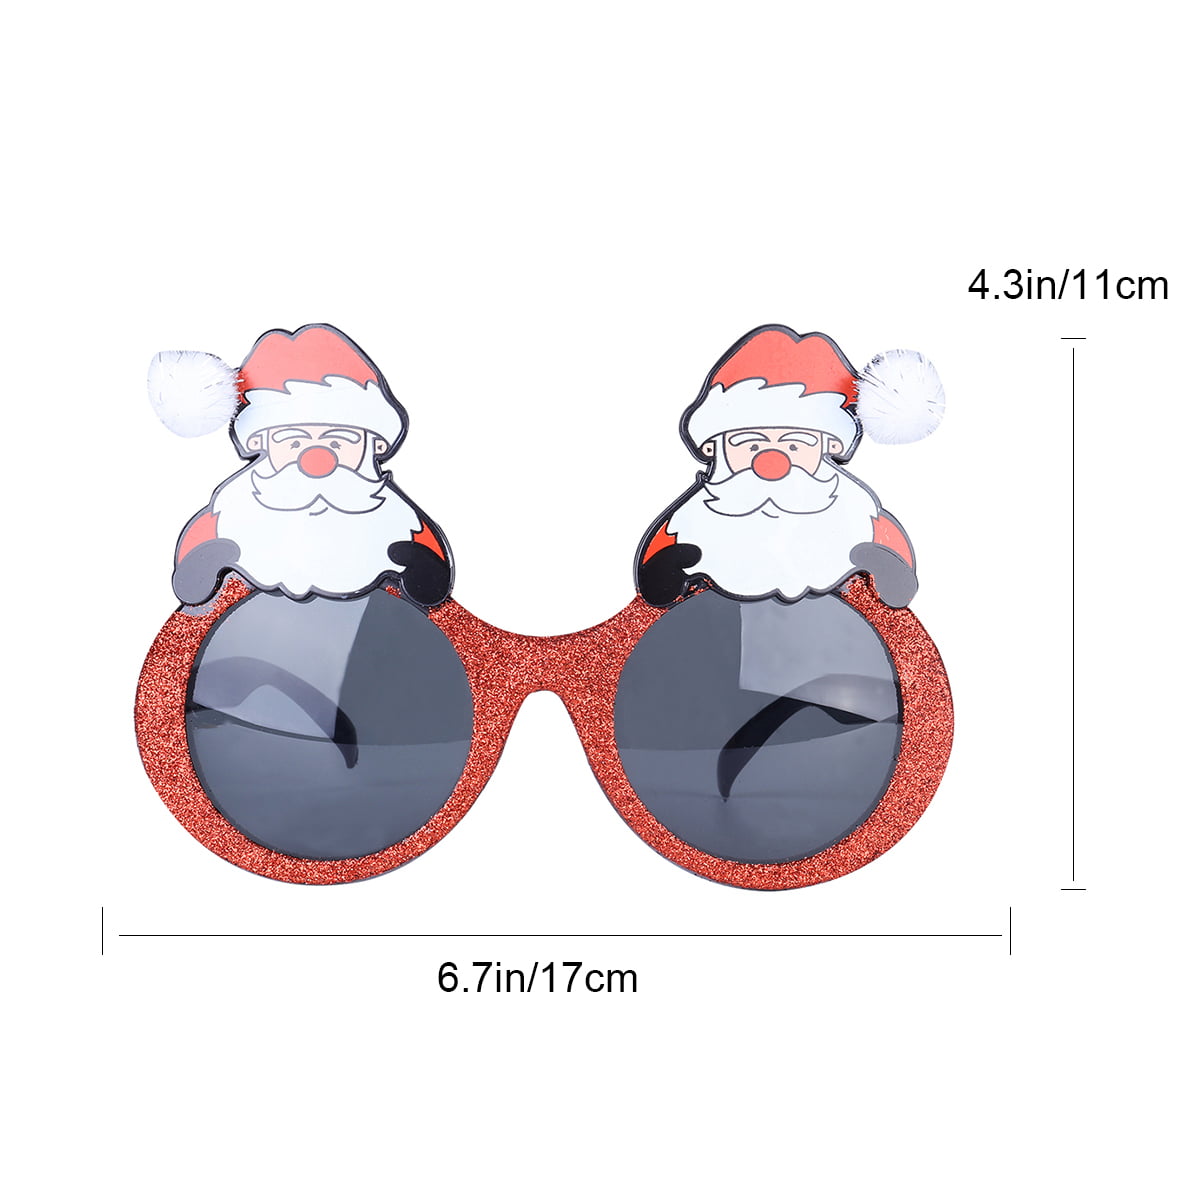 Novelty Christmas Sunglasses Xmas Fun Fancy Dress Festive Ornaments Glasses*1 